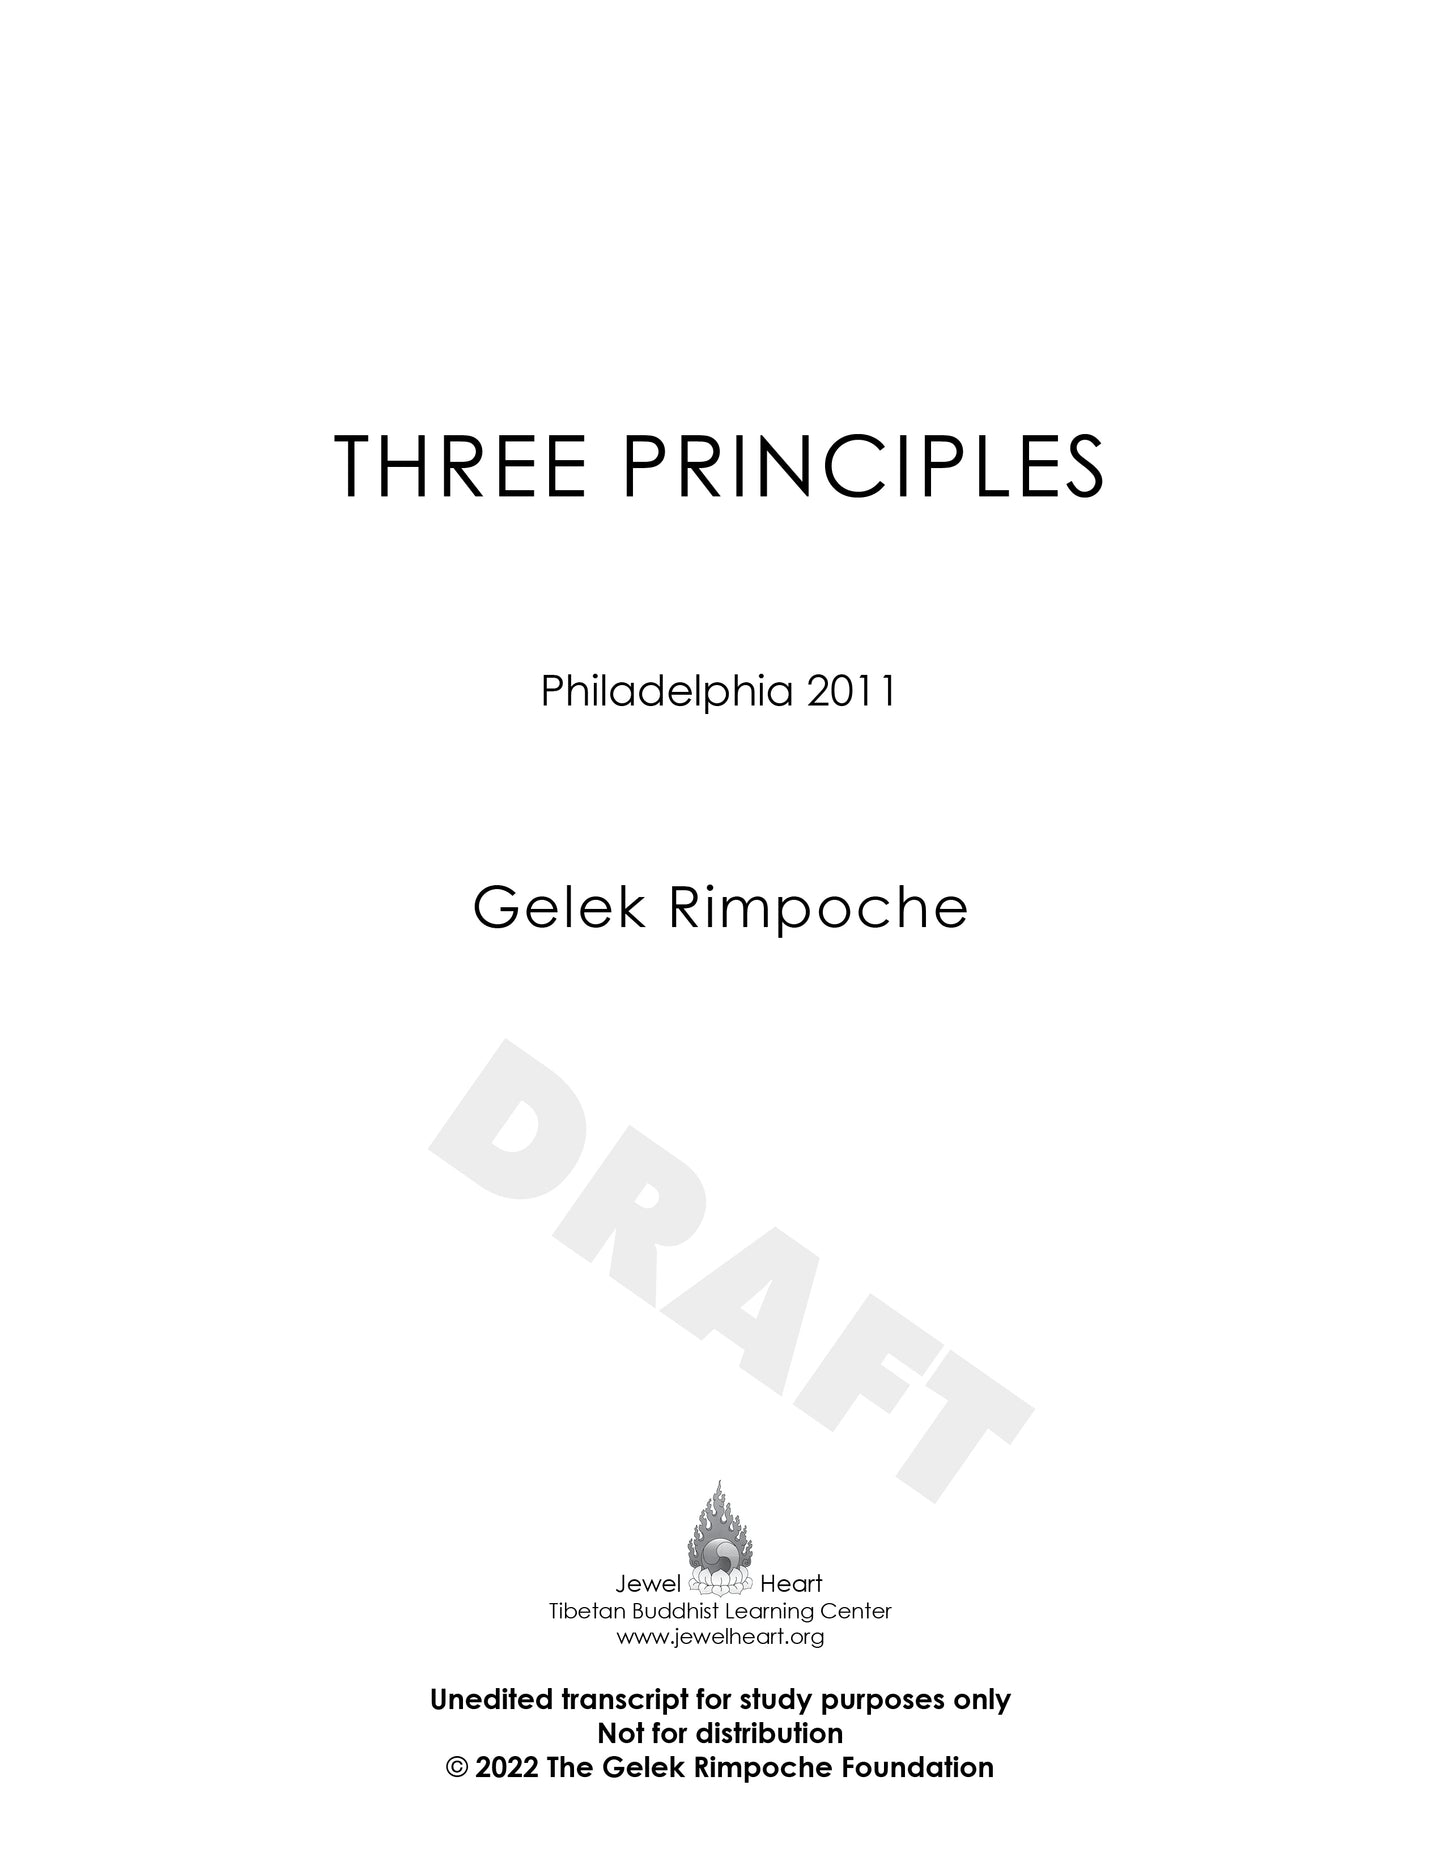 Three Principles: Philadelphia 2011